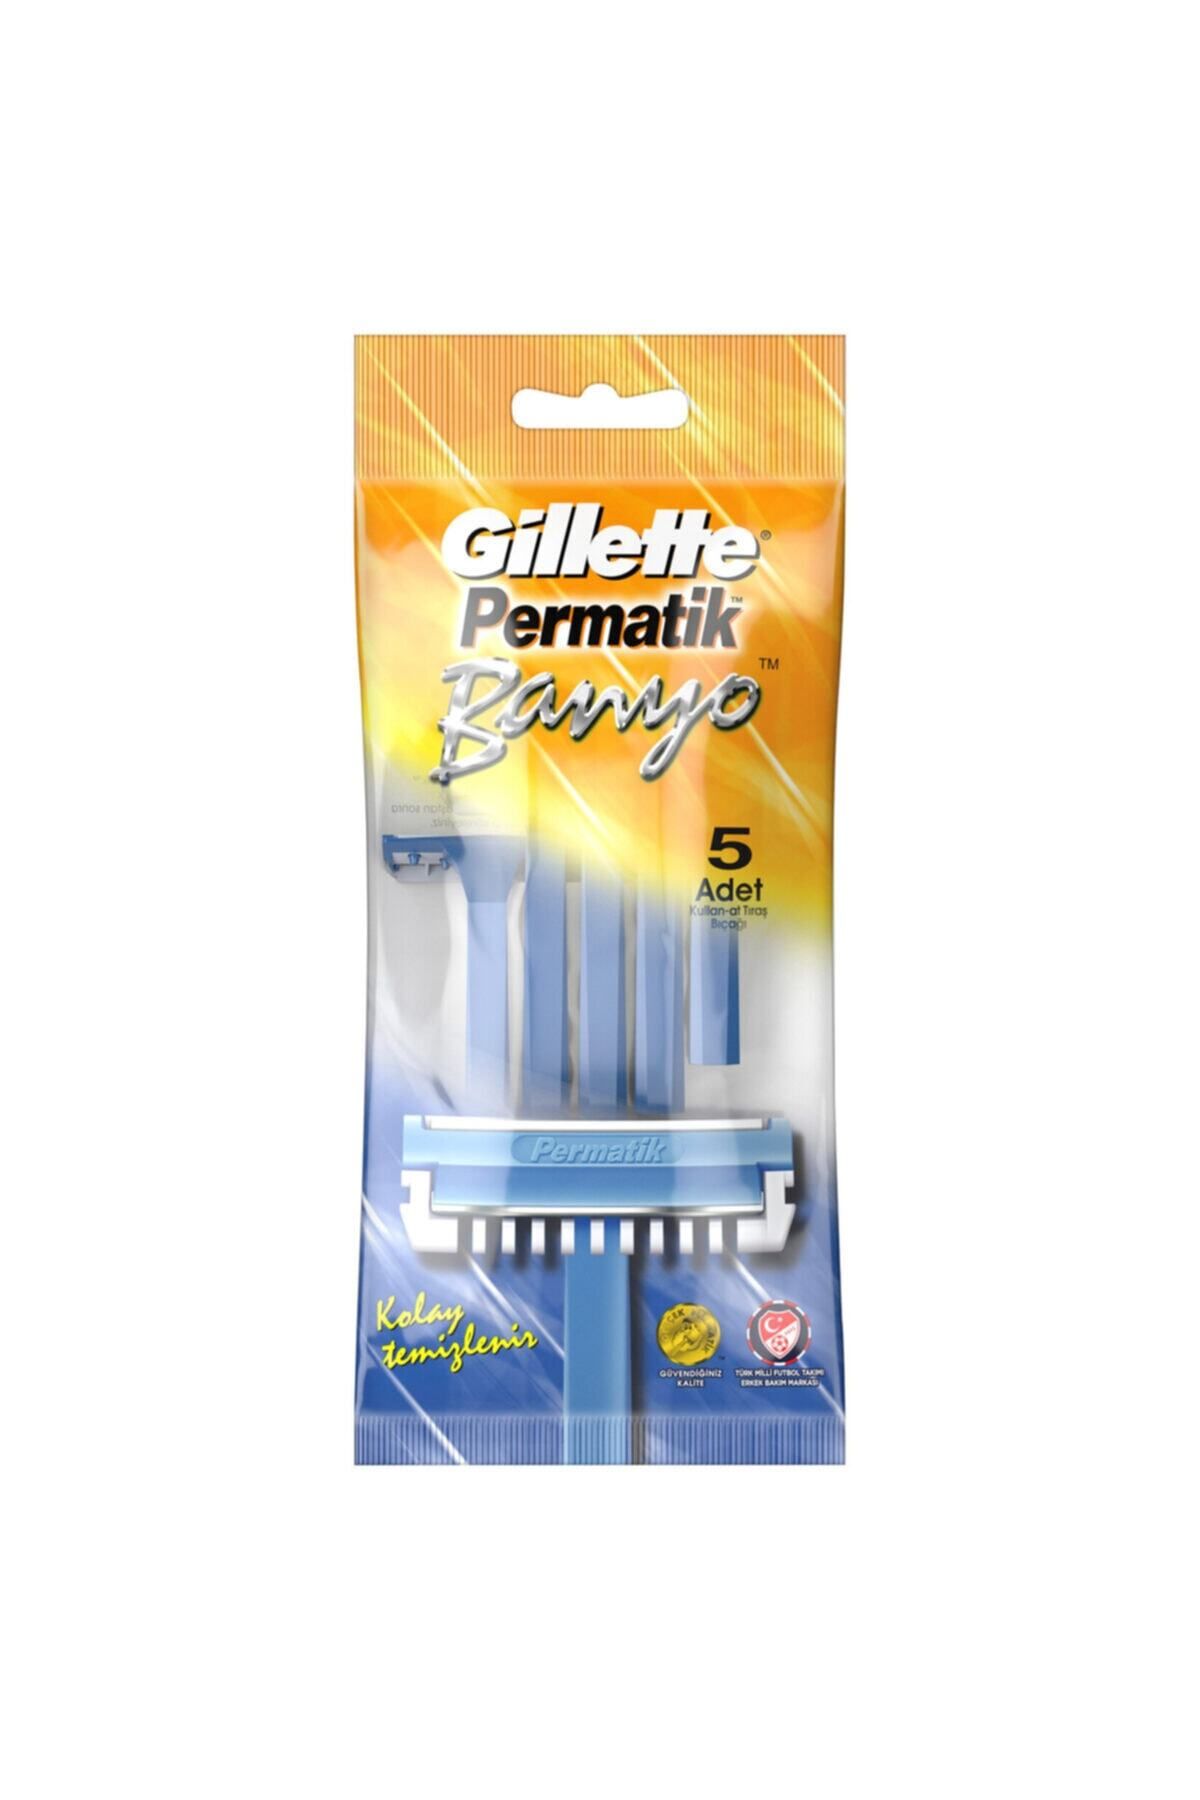 Permatik Gillette Banyo Kullan At Tıraş Bıçağı 5'li